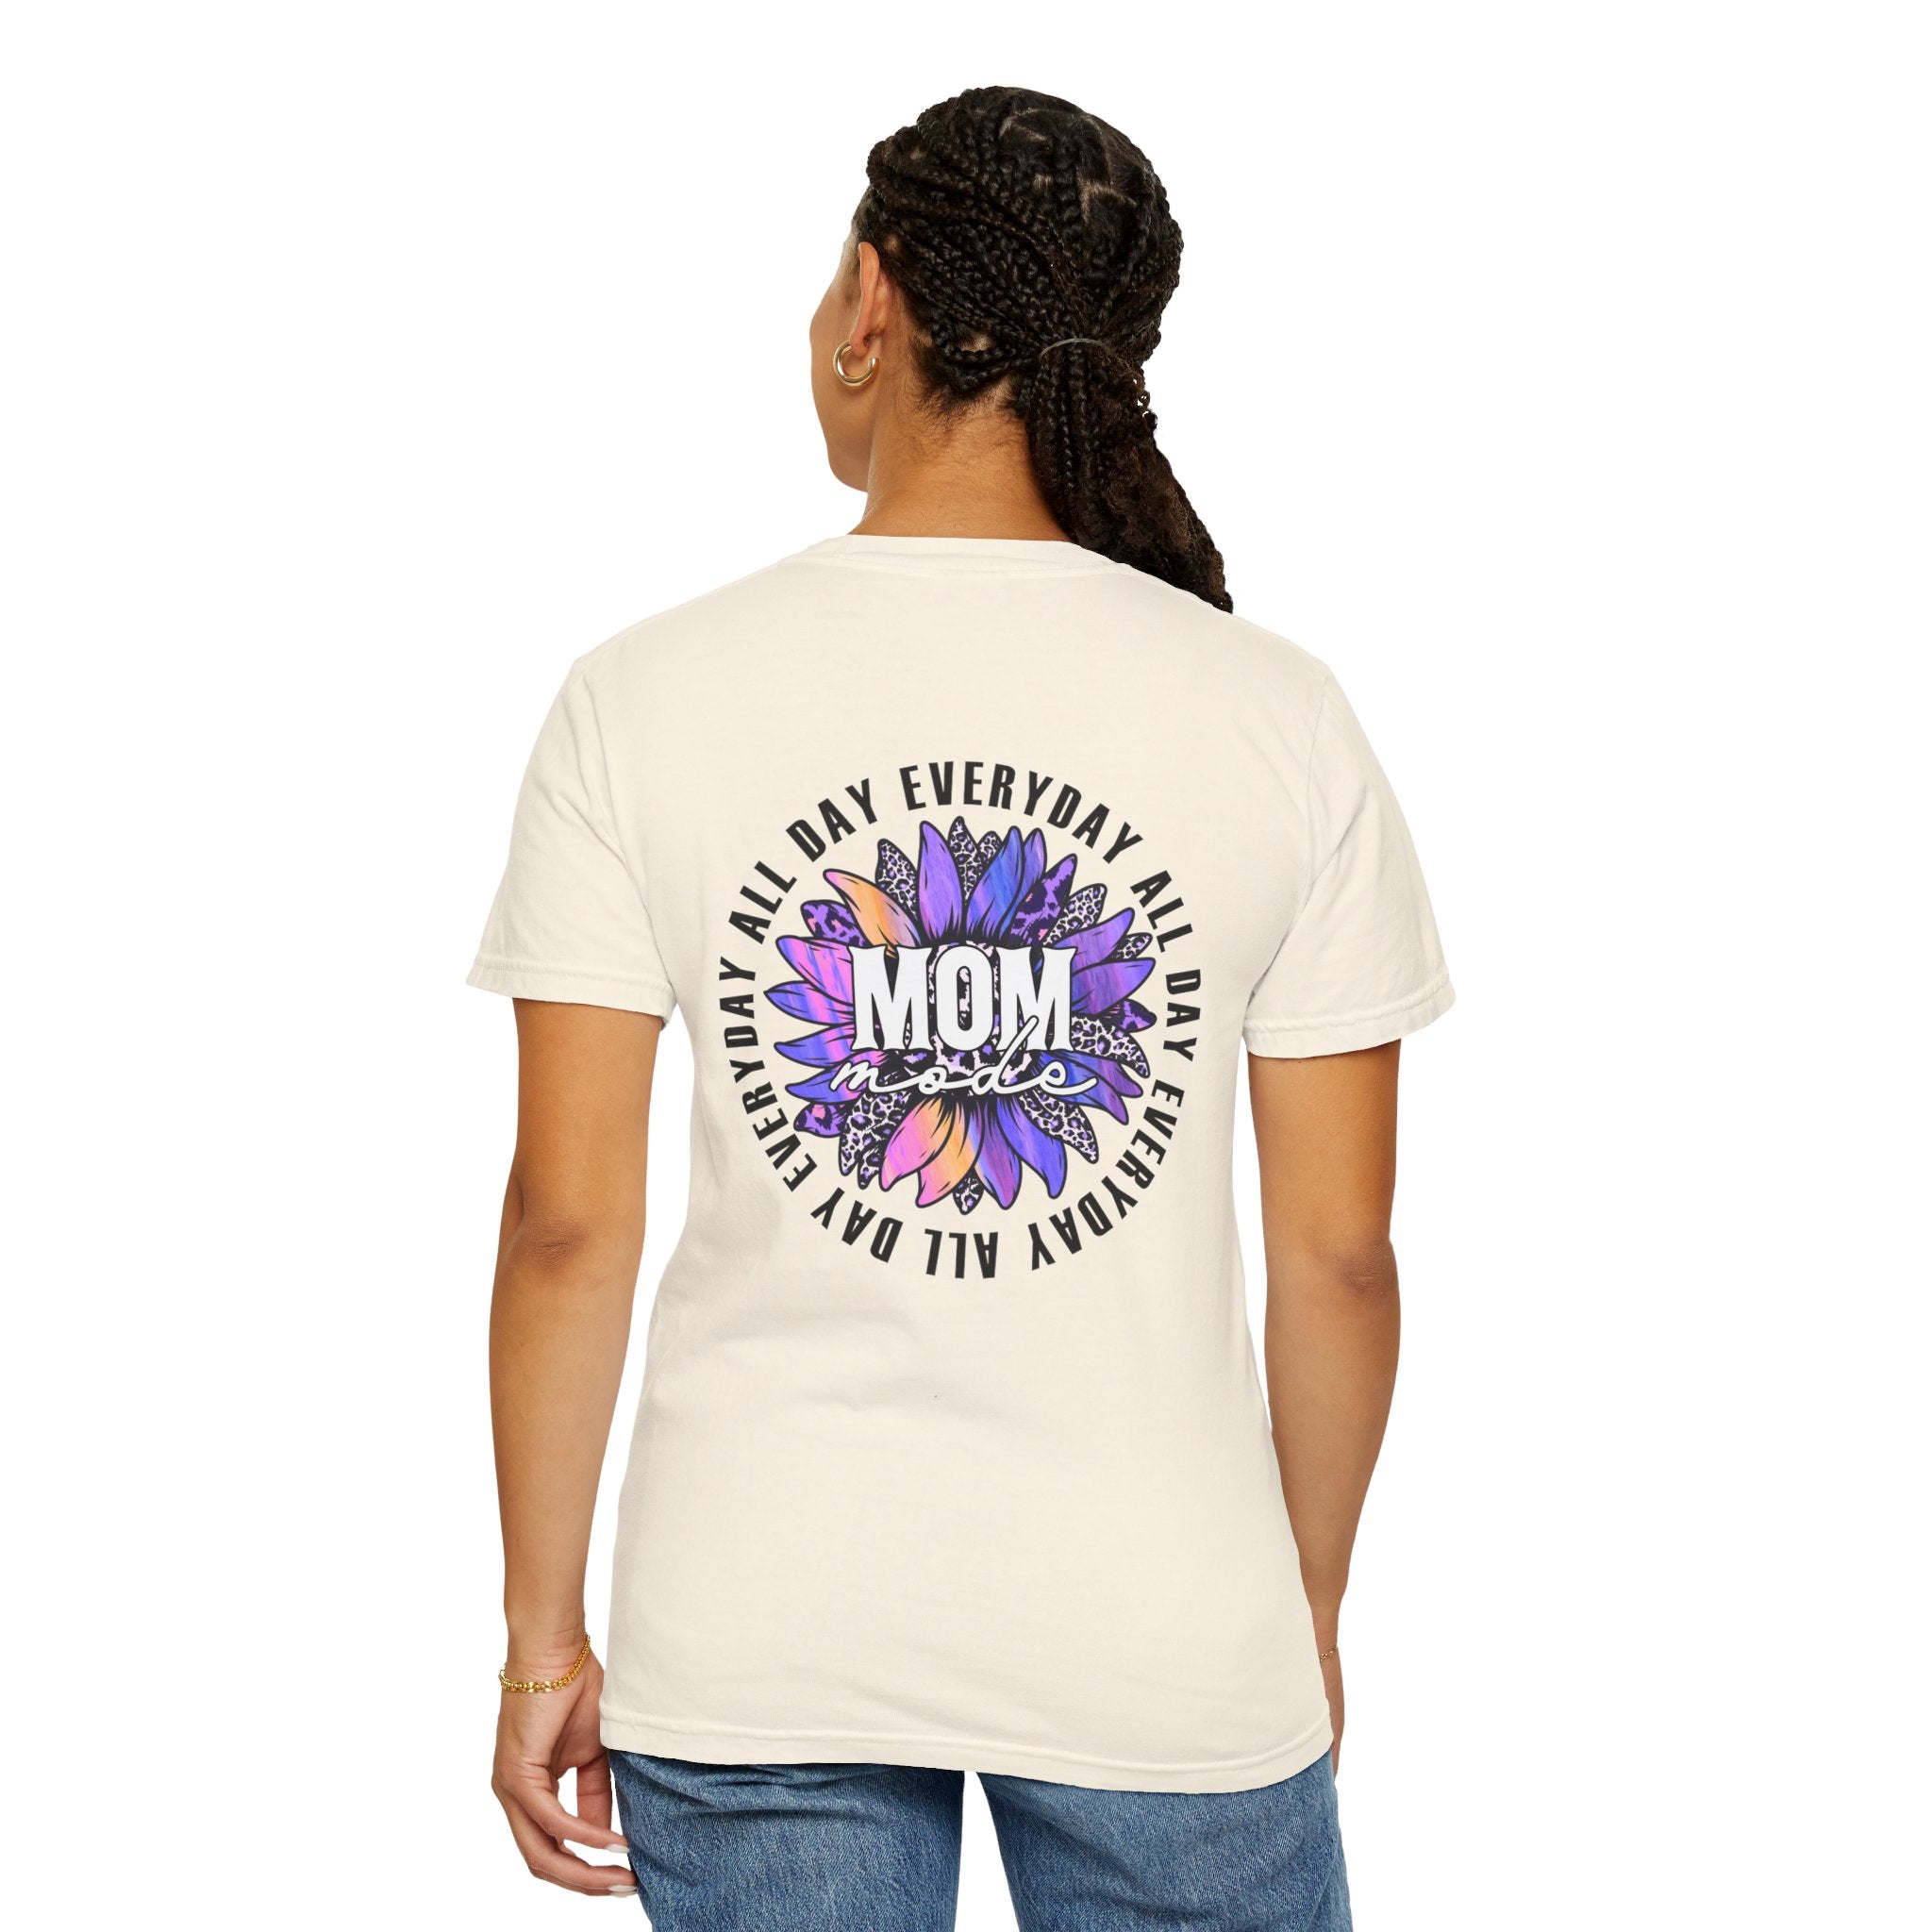 Mama Mode T-shirt